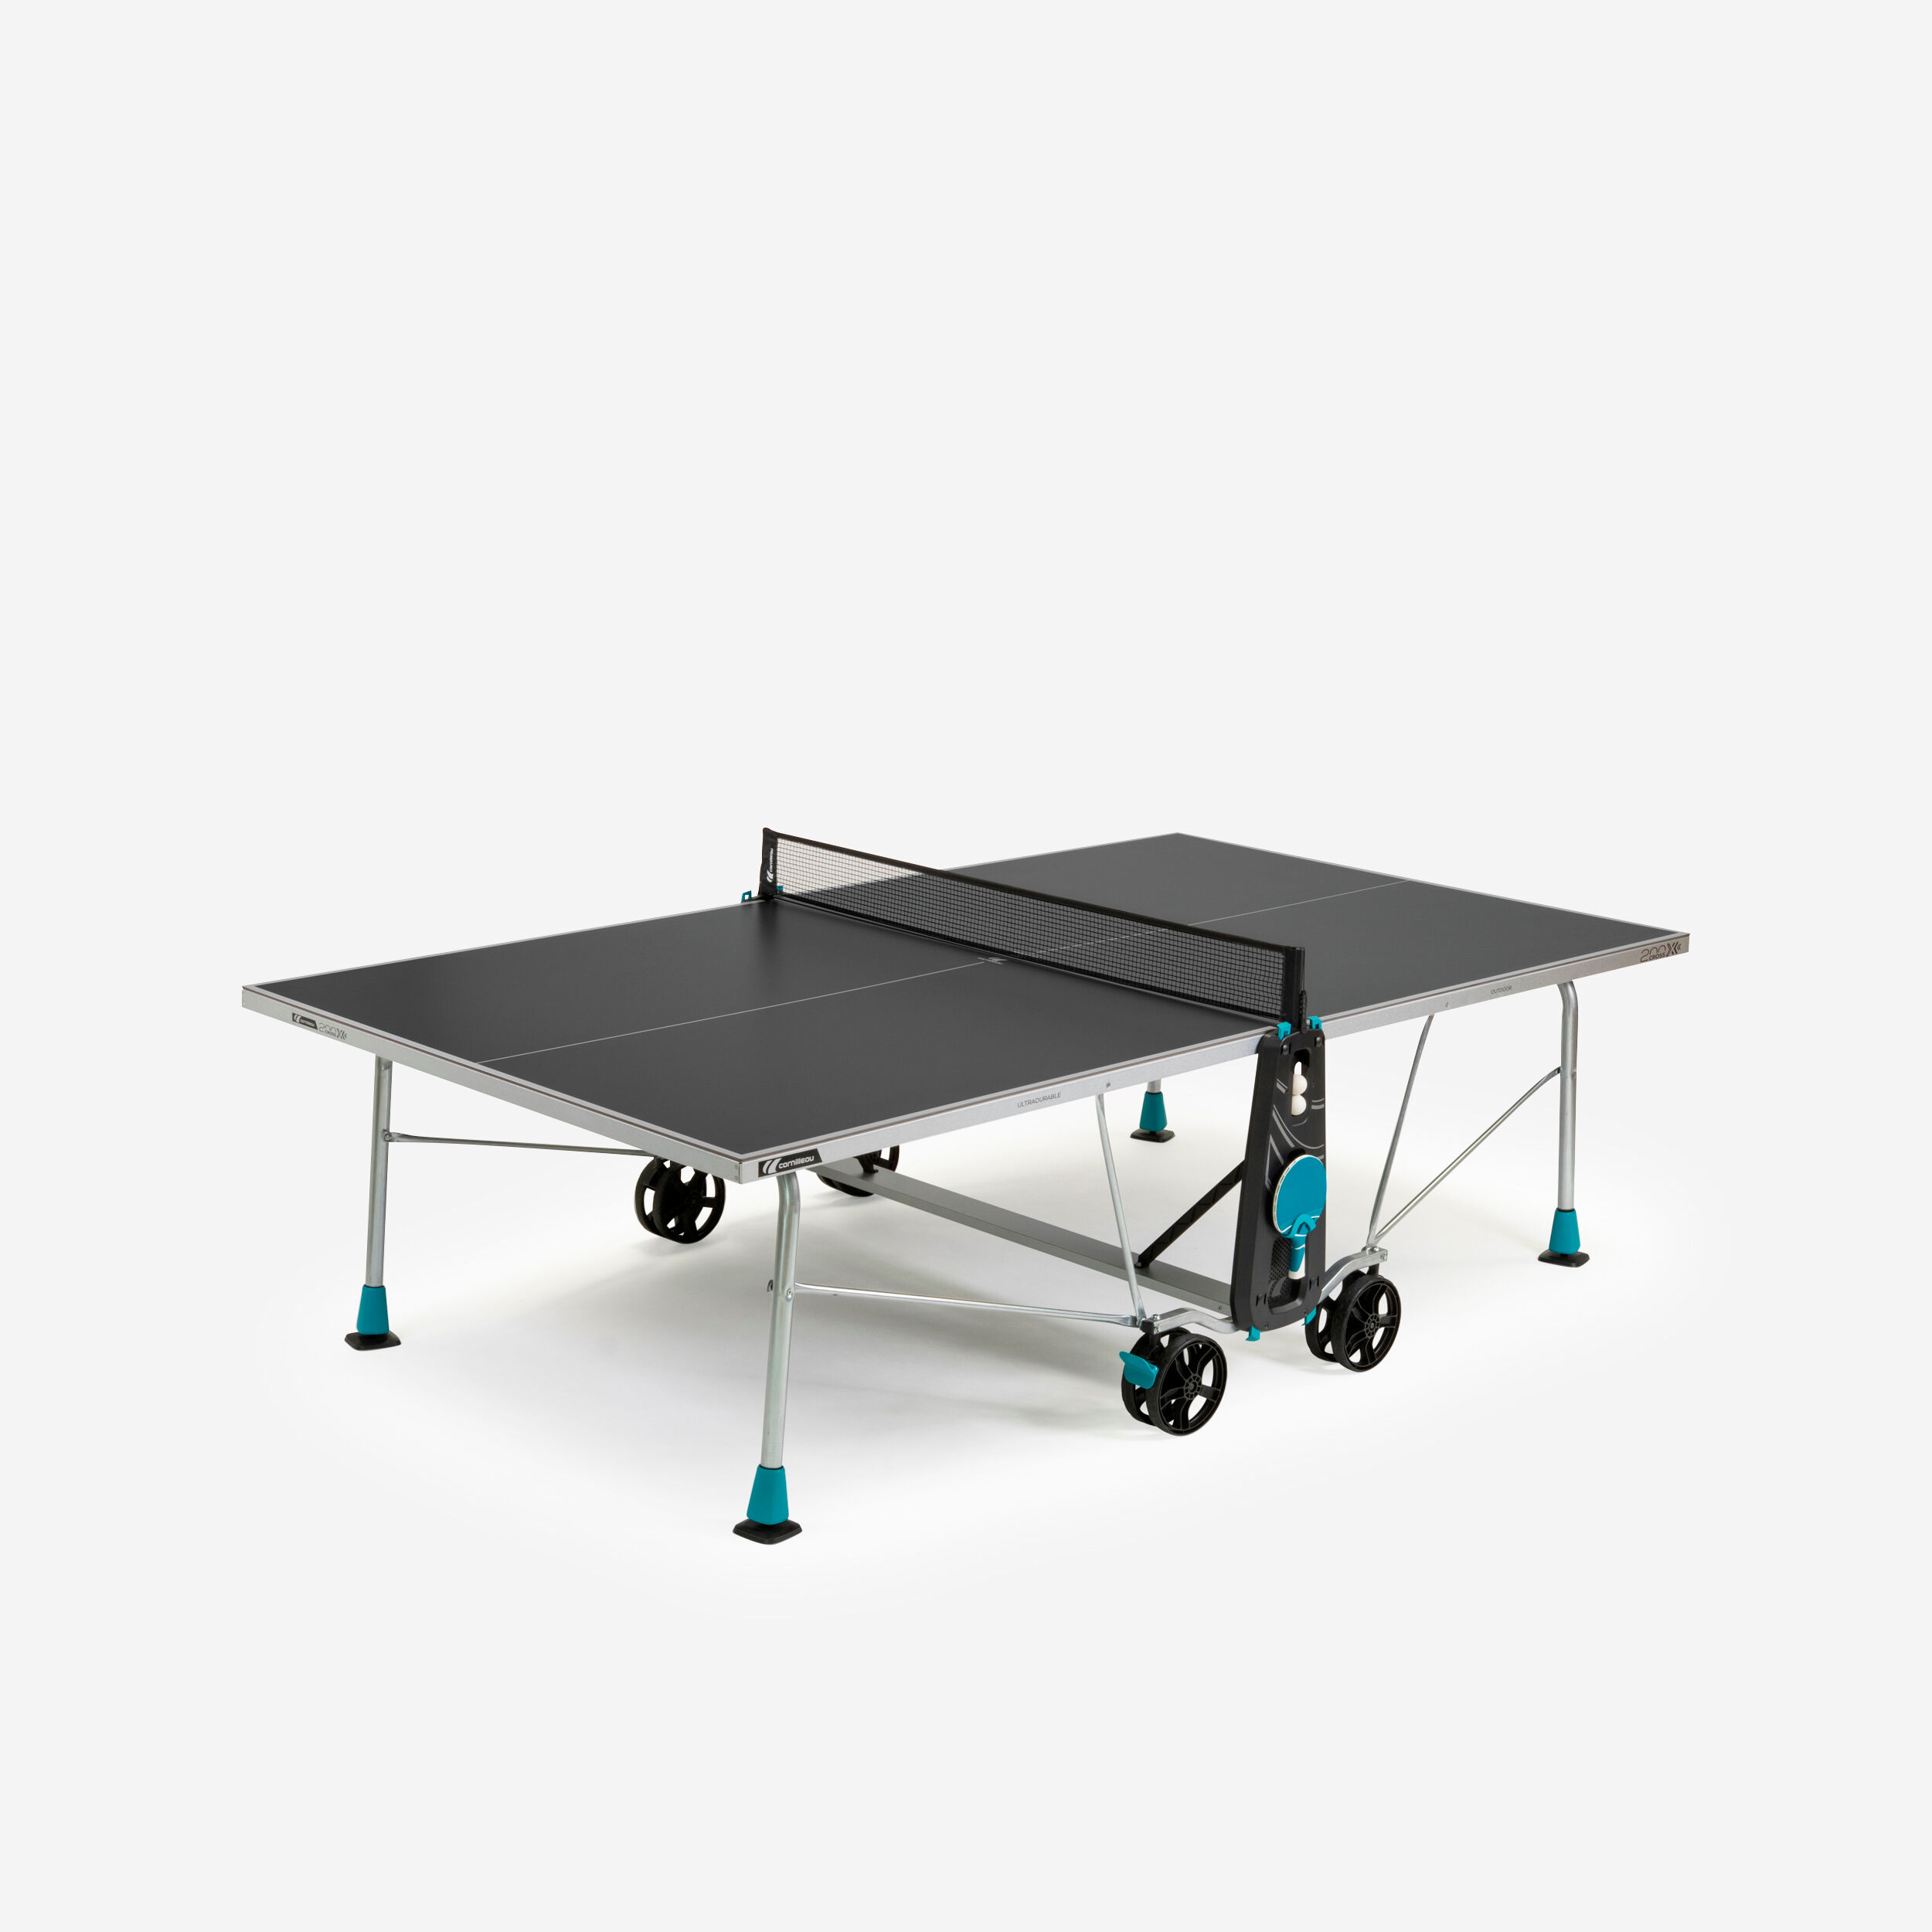 CORNILLEAU Outdoor Recreational Table Tennis Table 200X - Grey